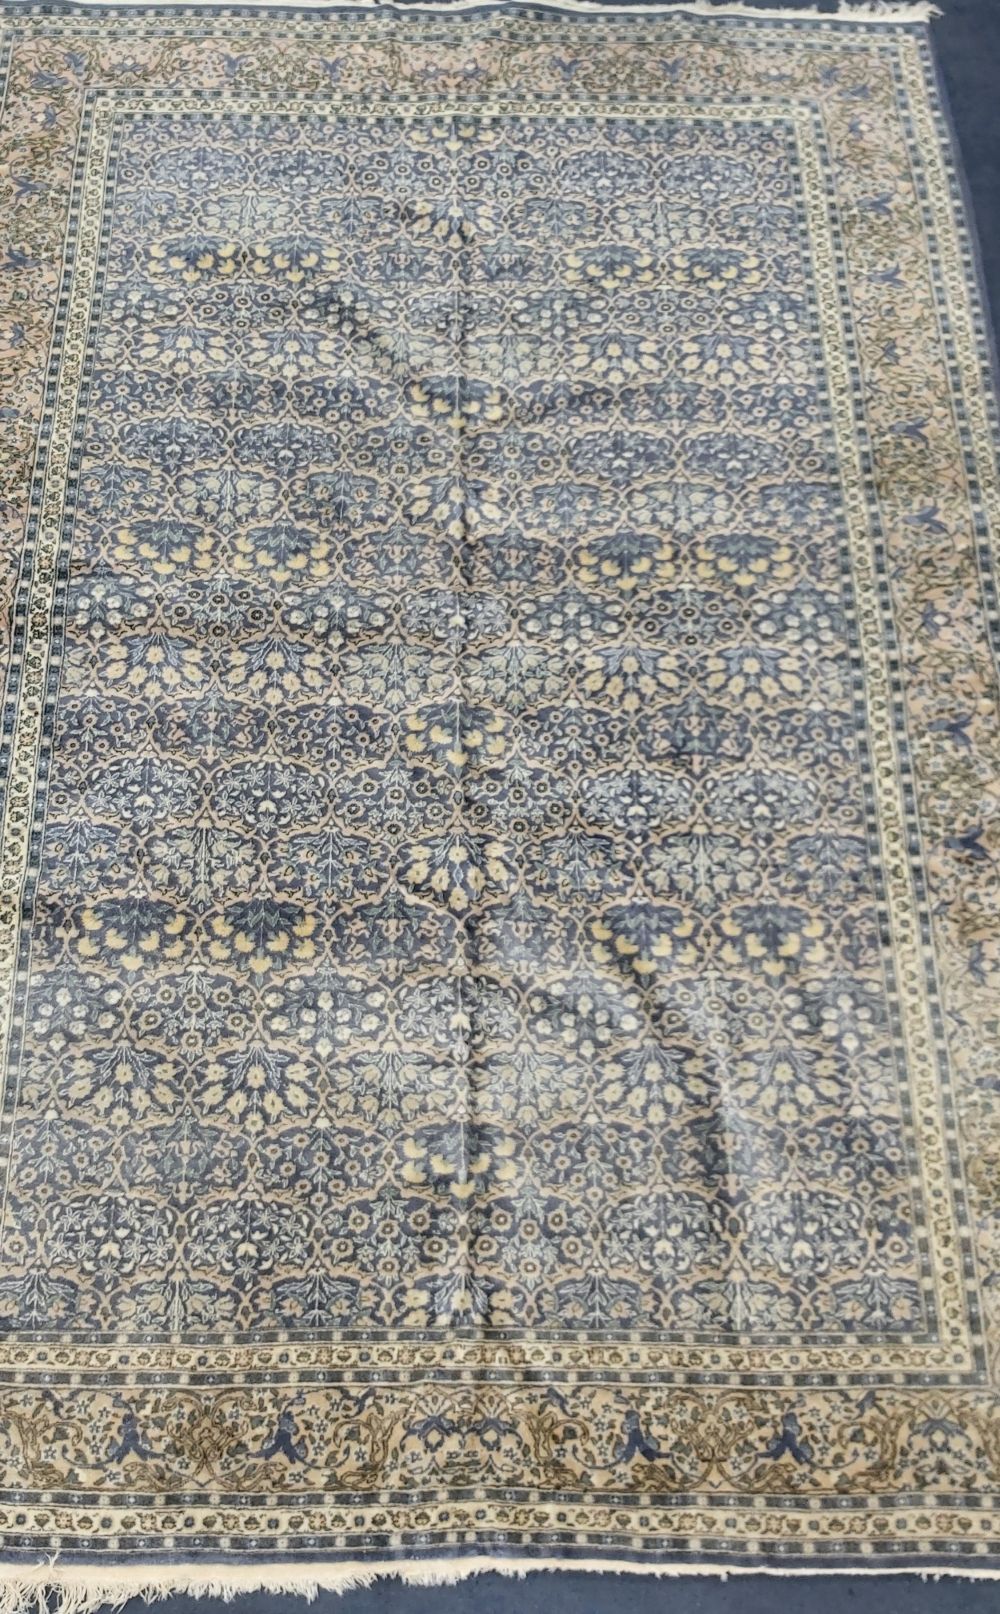 A Kashan carpet, 298 x 207cm